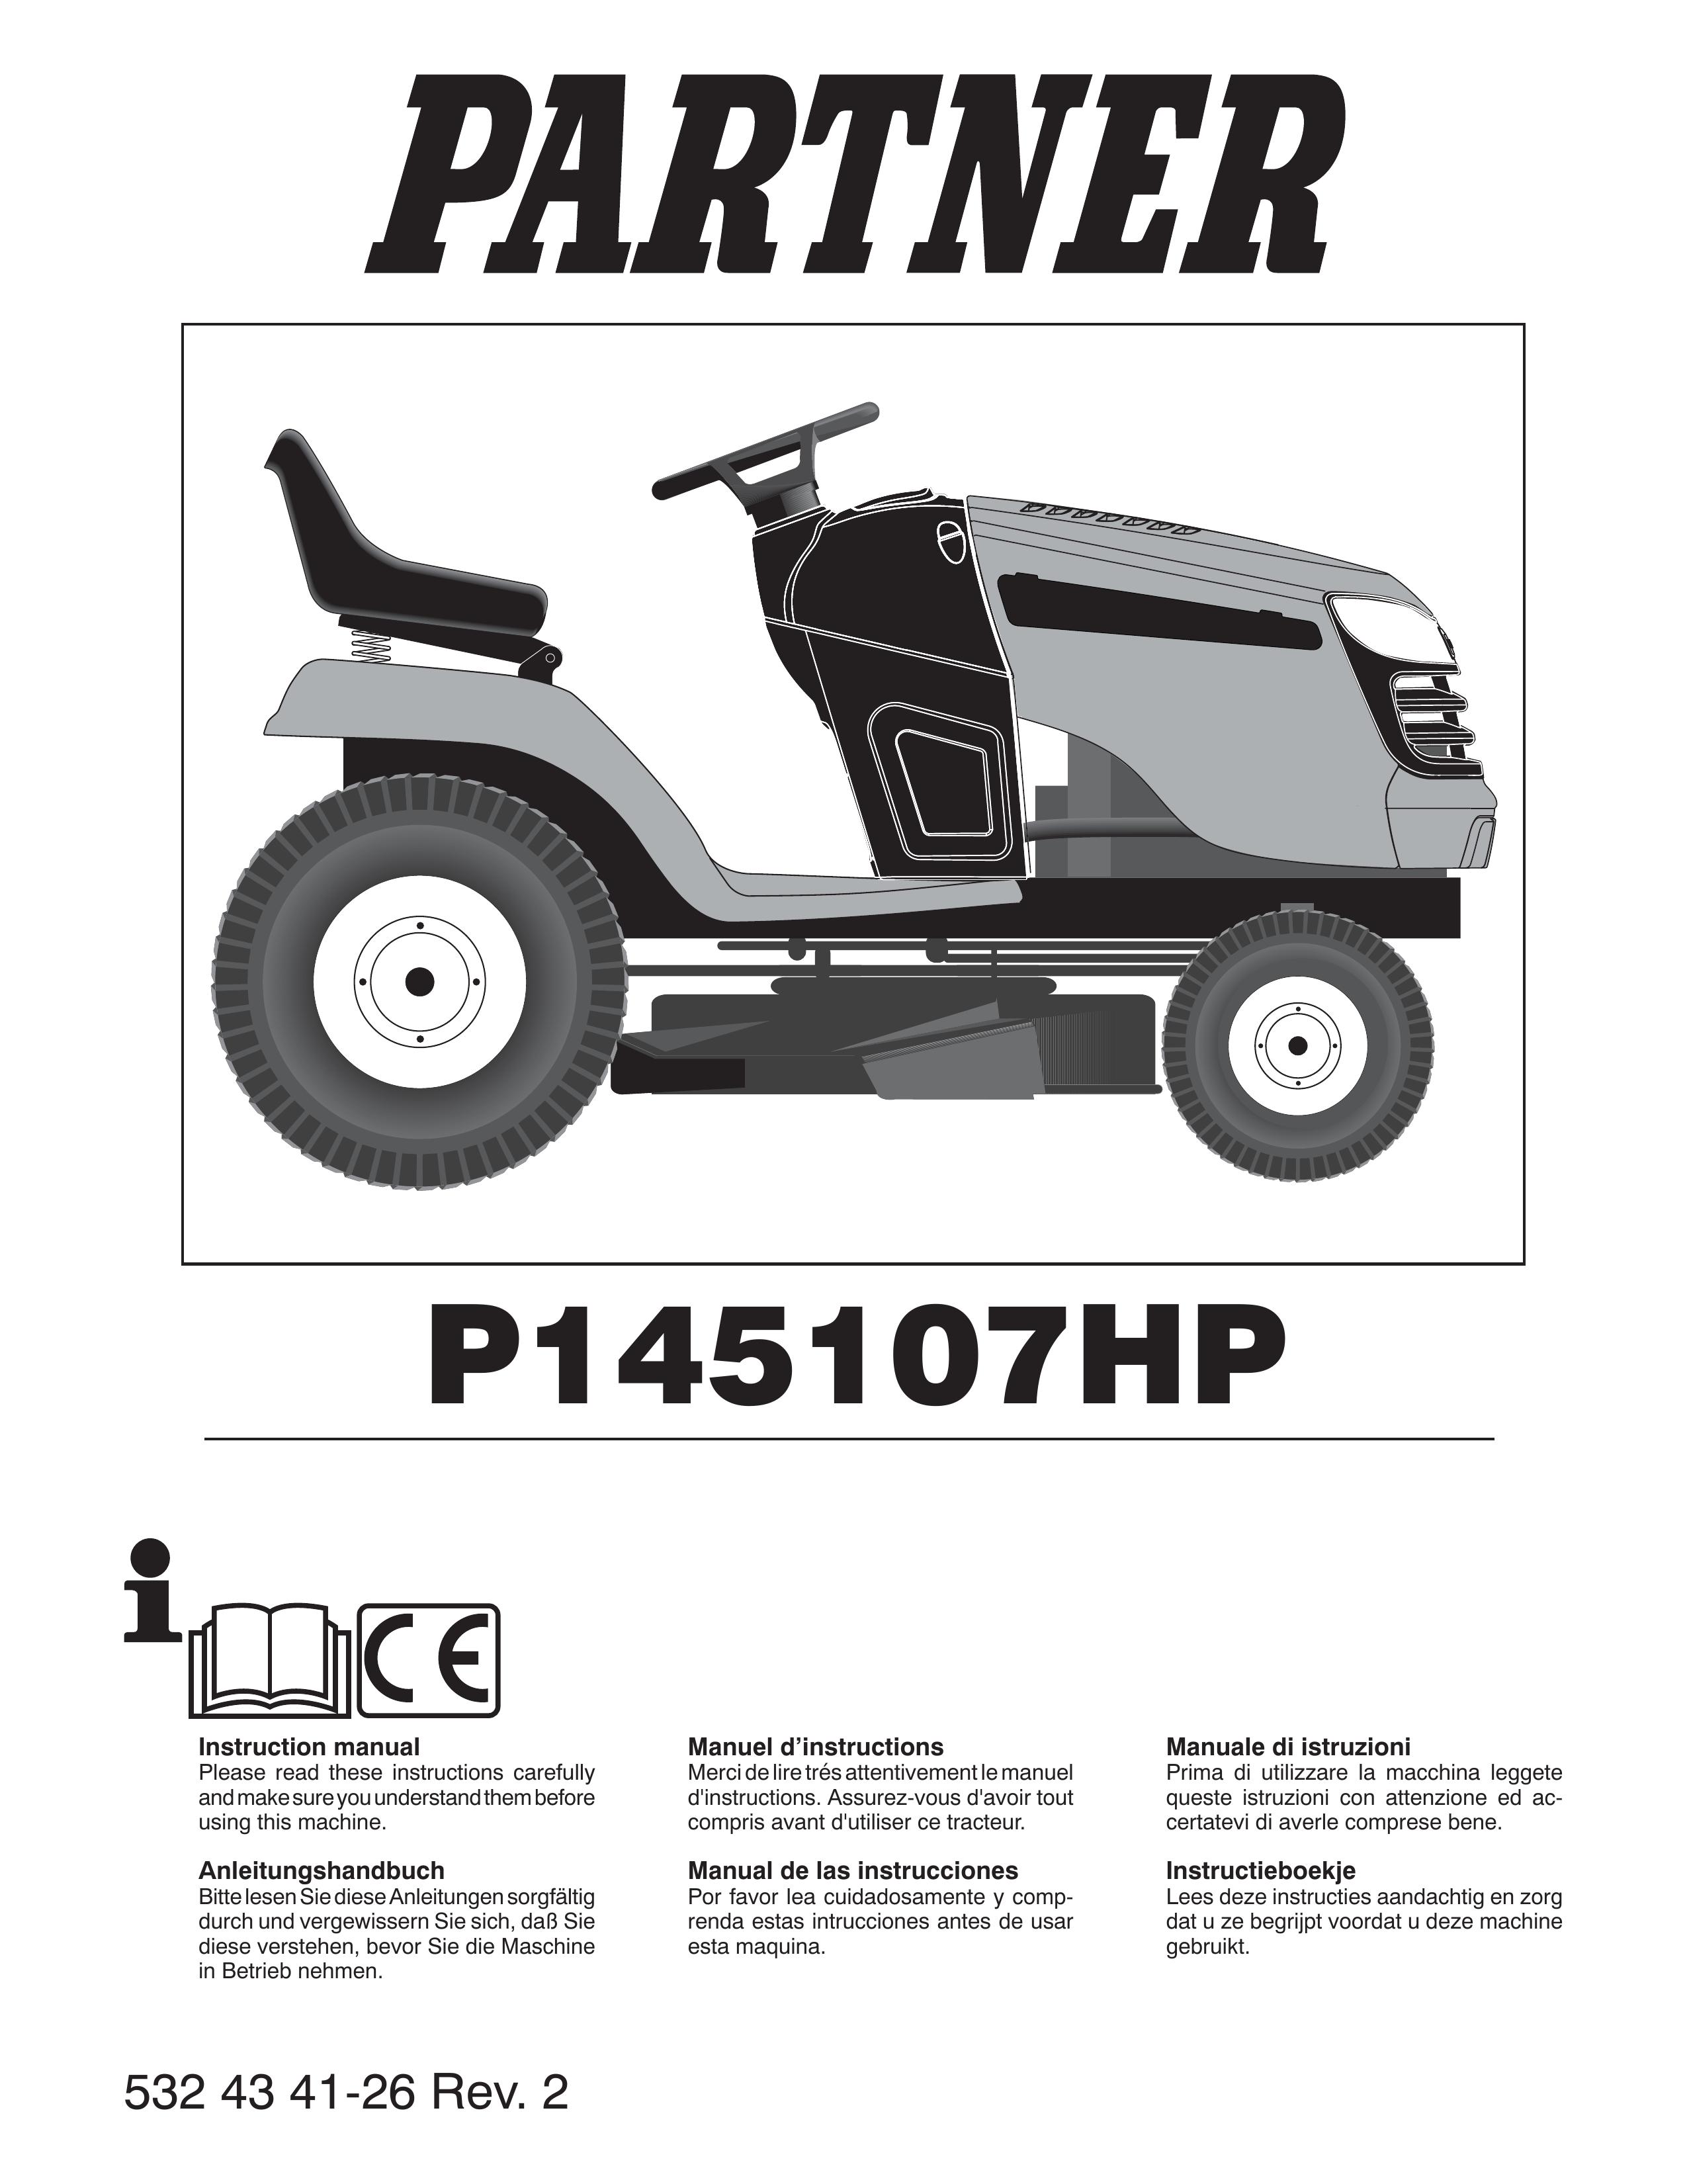 Partner Tech P145107HP Lawn Mower User Manual